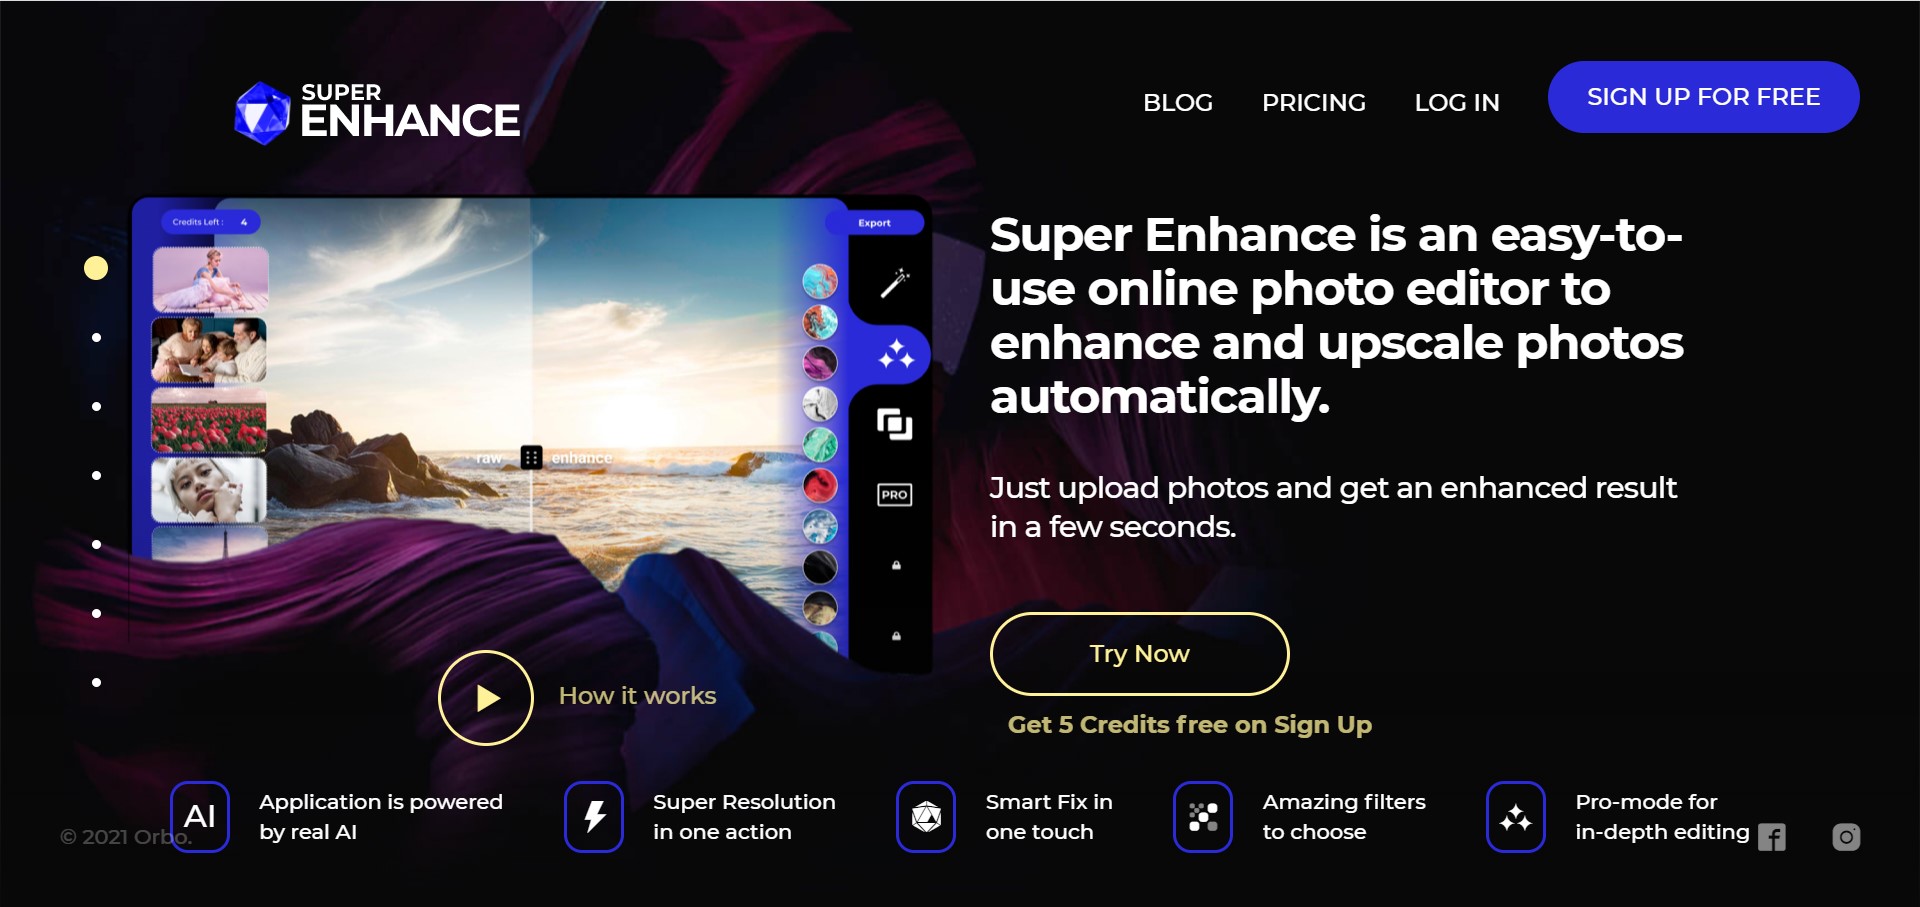 Find detailed information about Super Enhance